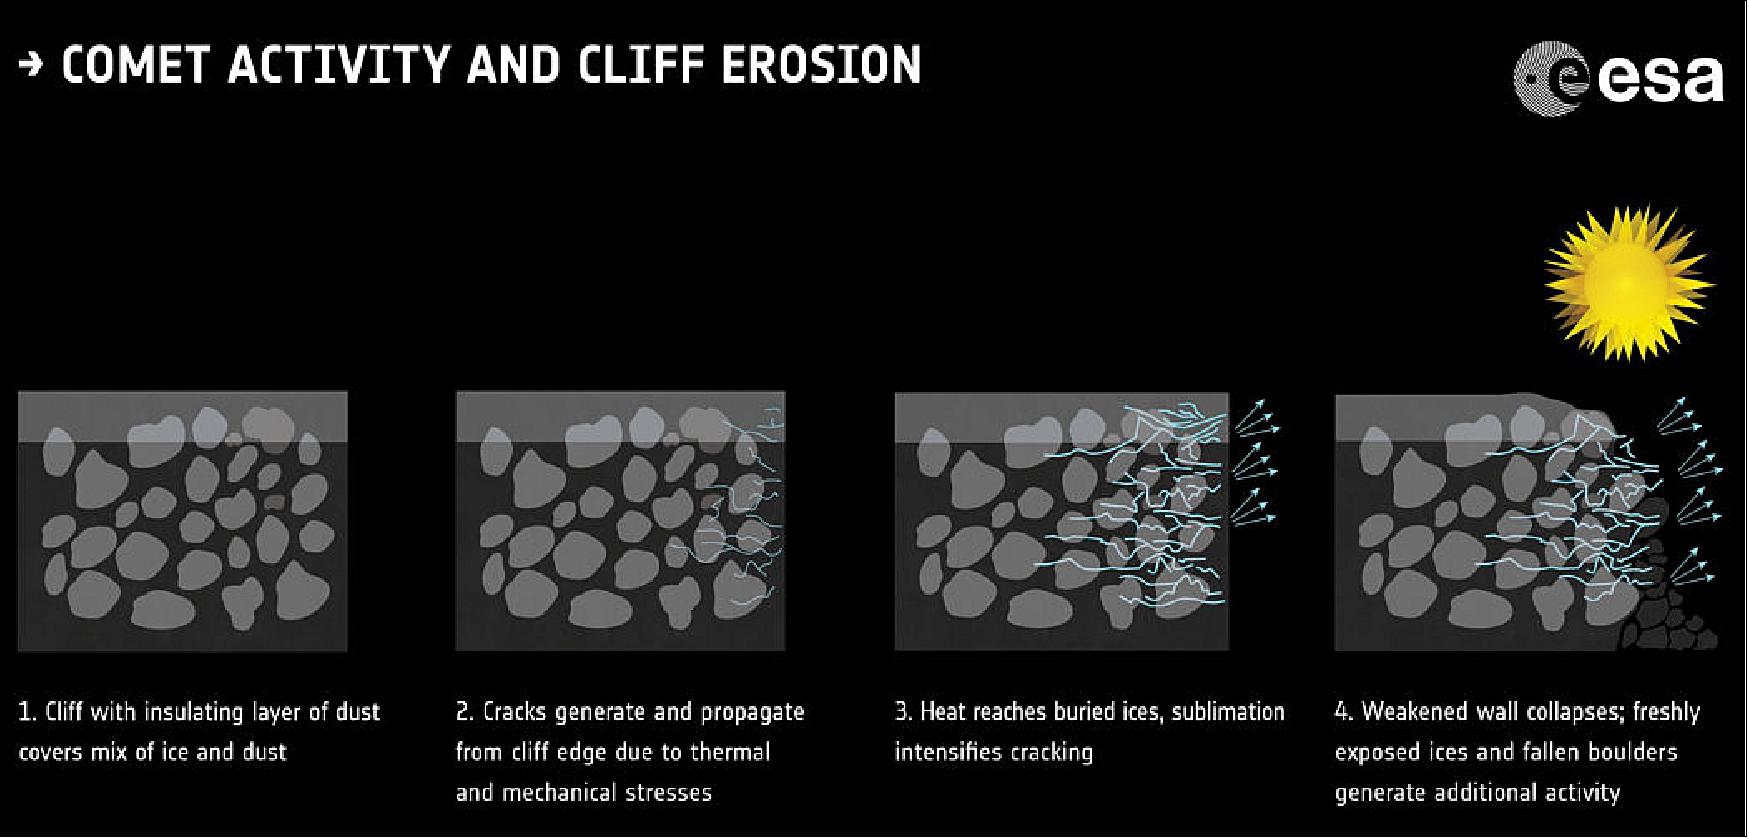 Figure 88: Cliff collapse and comet activity (image credit: Based on J.-B. Vincent et al (2015)